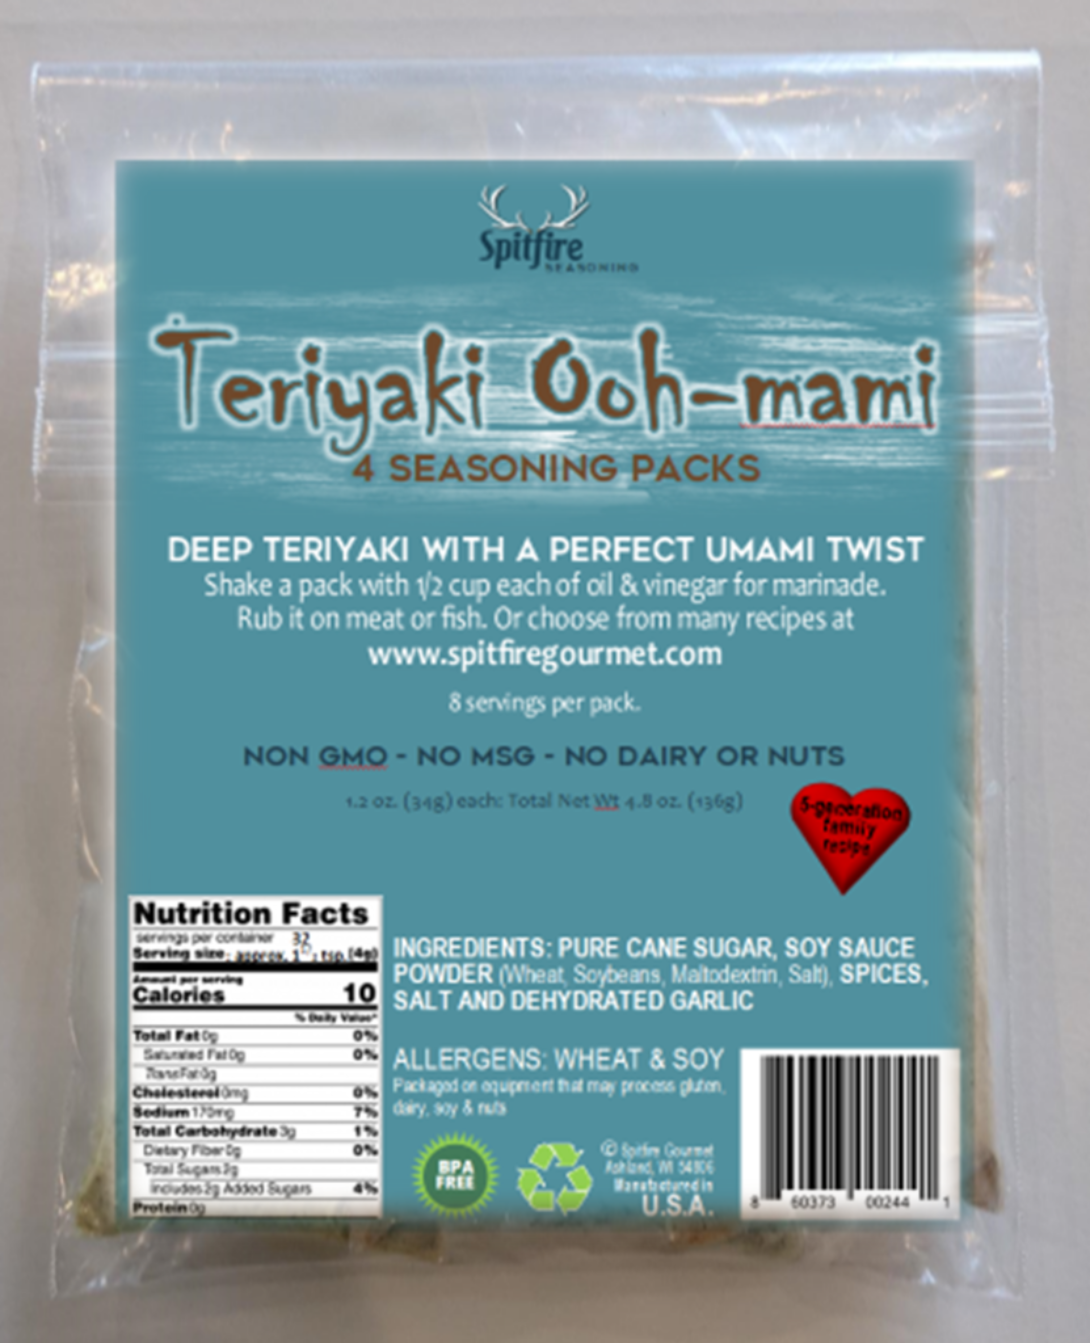 JUST THE PACKS "Teriyaki Ooh-mami" Seasoning Packs (4 packs, each makes a recipe for 8)